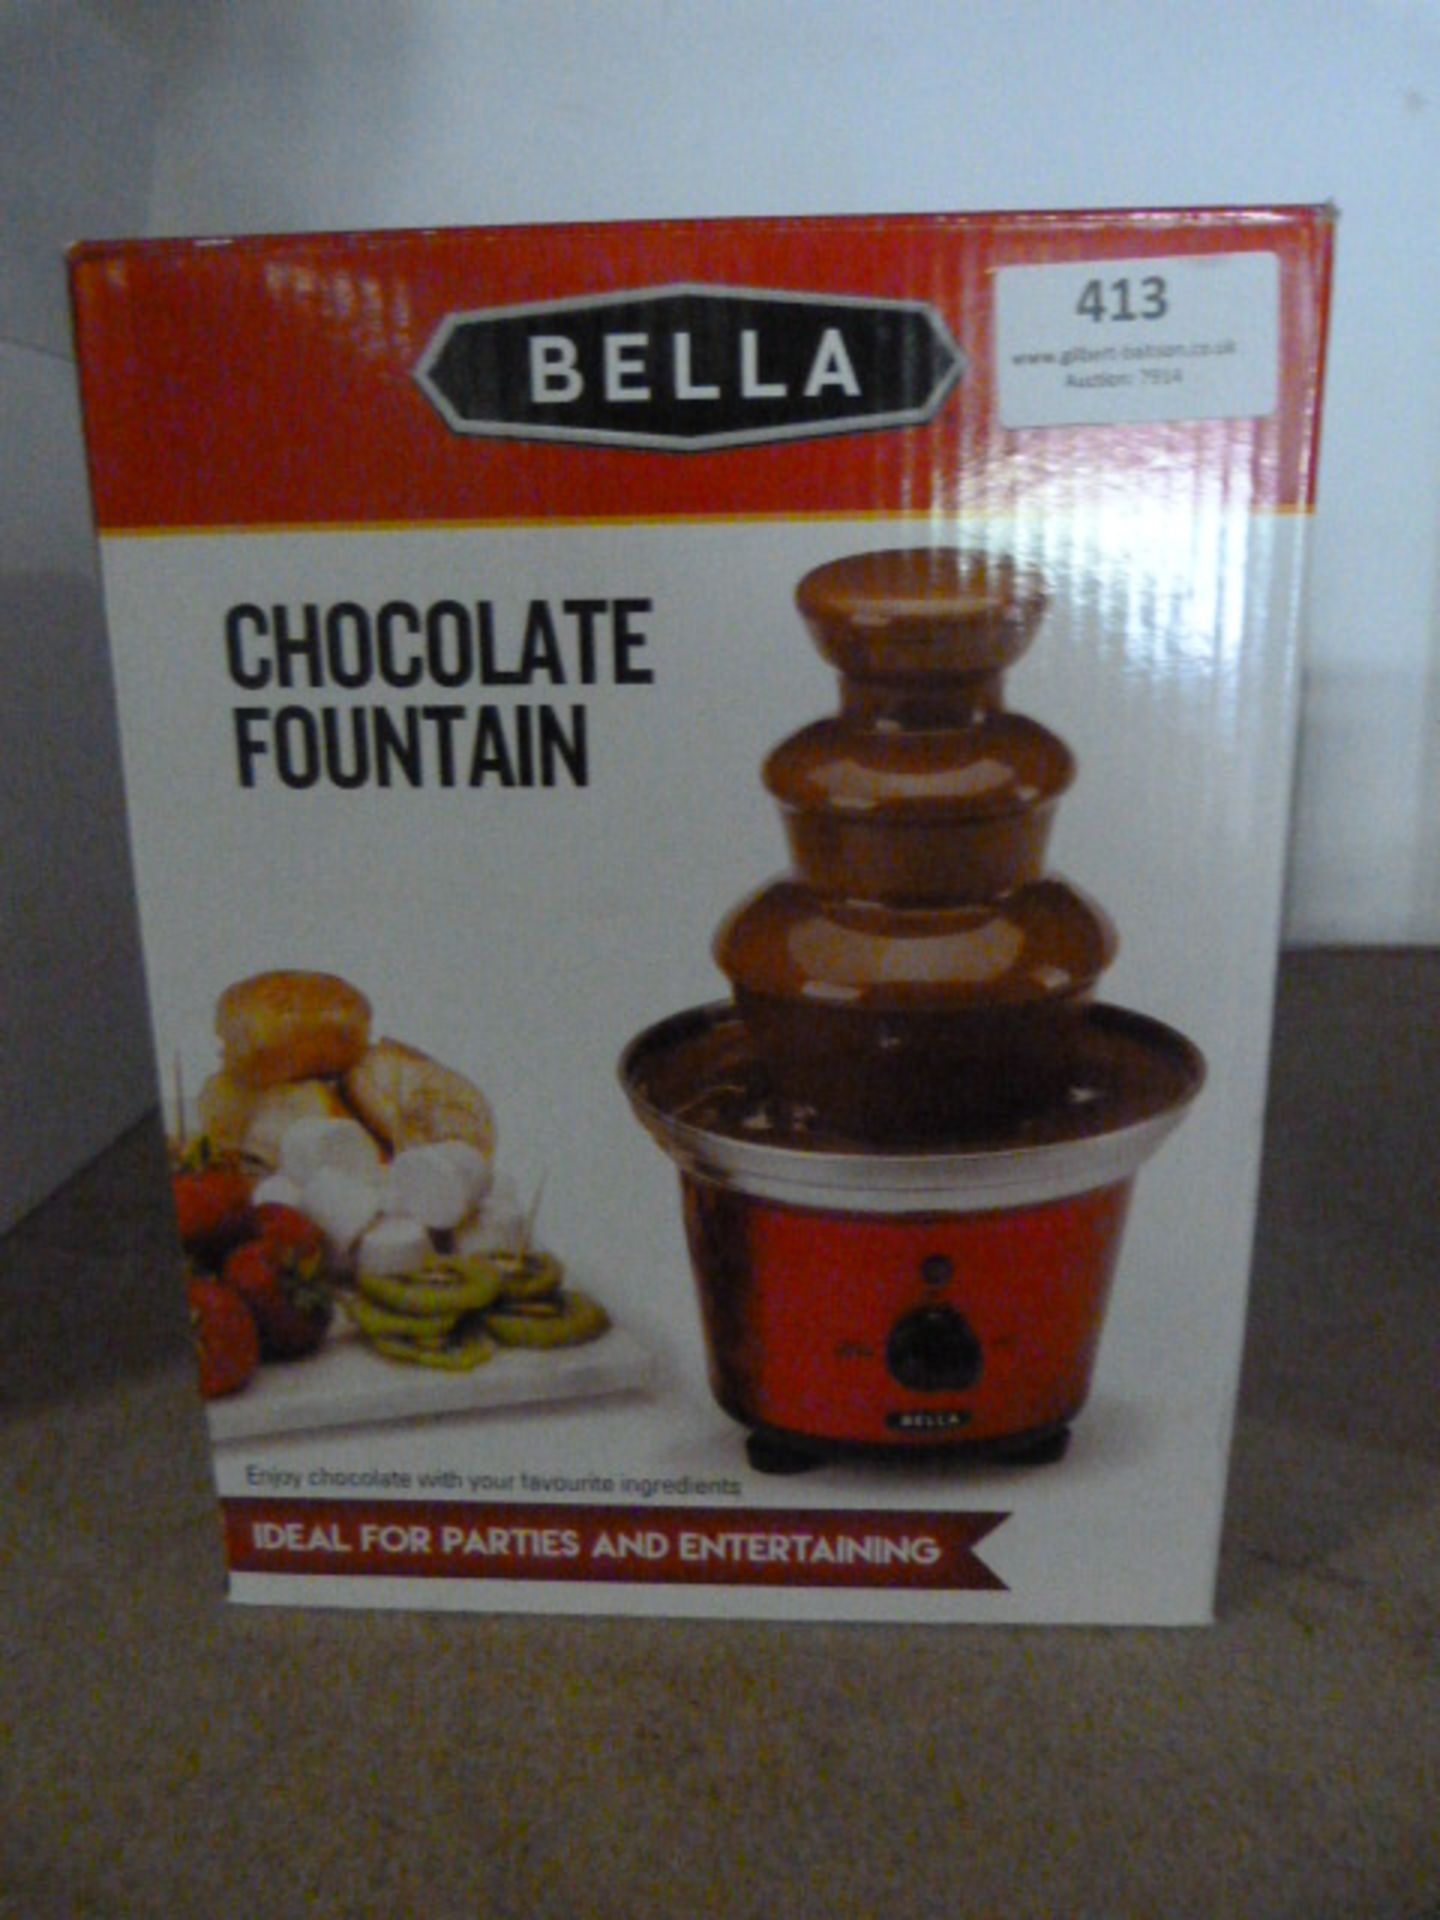 *Bella Chocolate Fountain